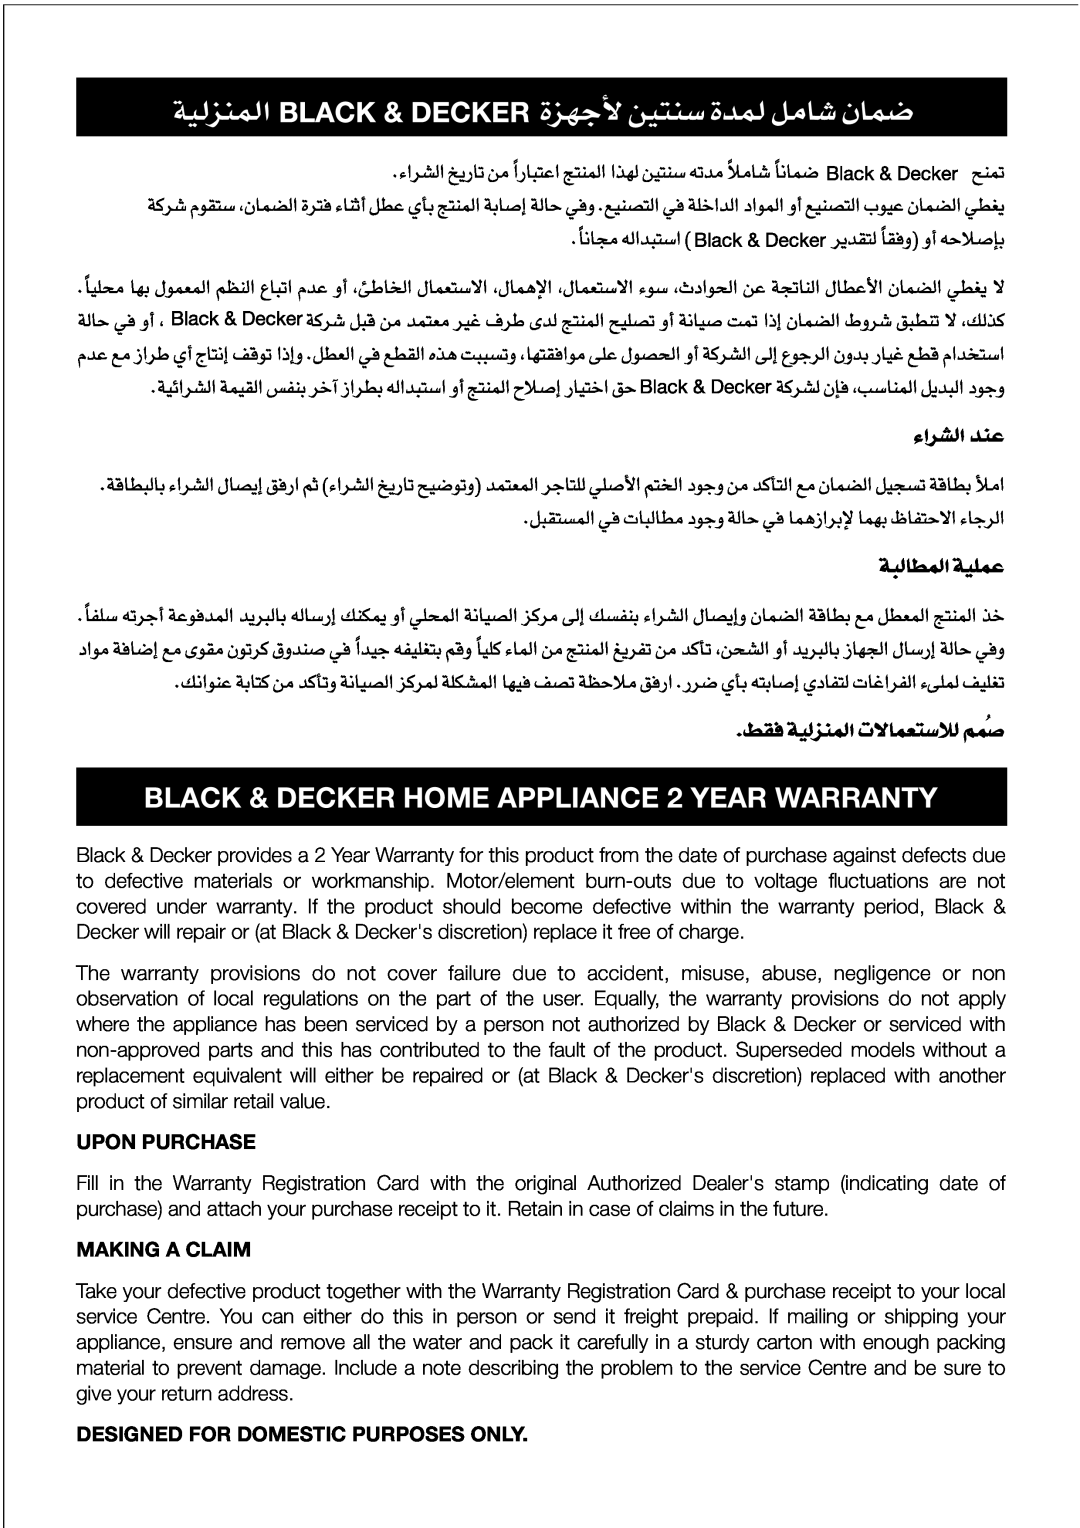 Black & Decker SB22 manual BLACK & DECKER HOME APPLIANCE 2 YEAR WARRANTY, Upon Purchase, Making A Claim 